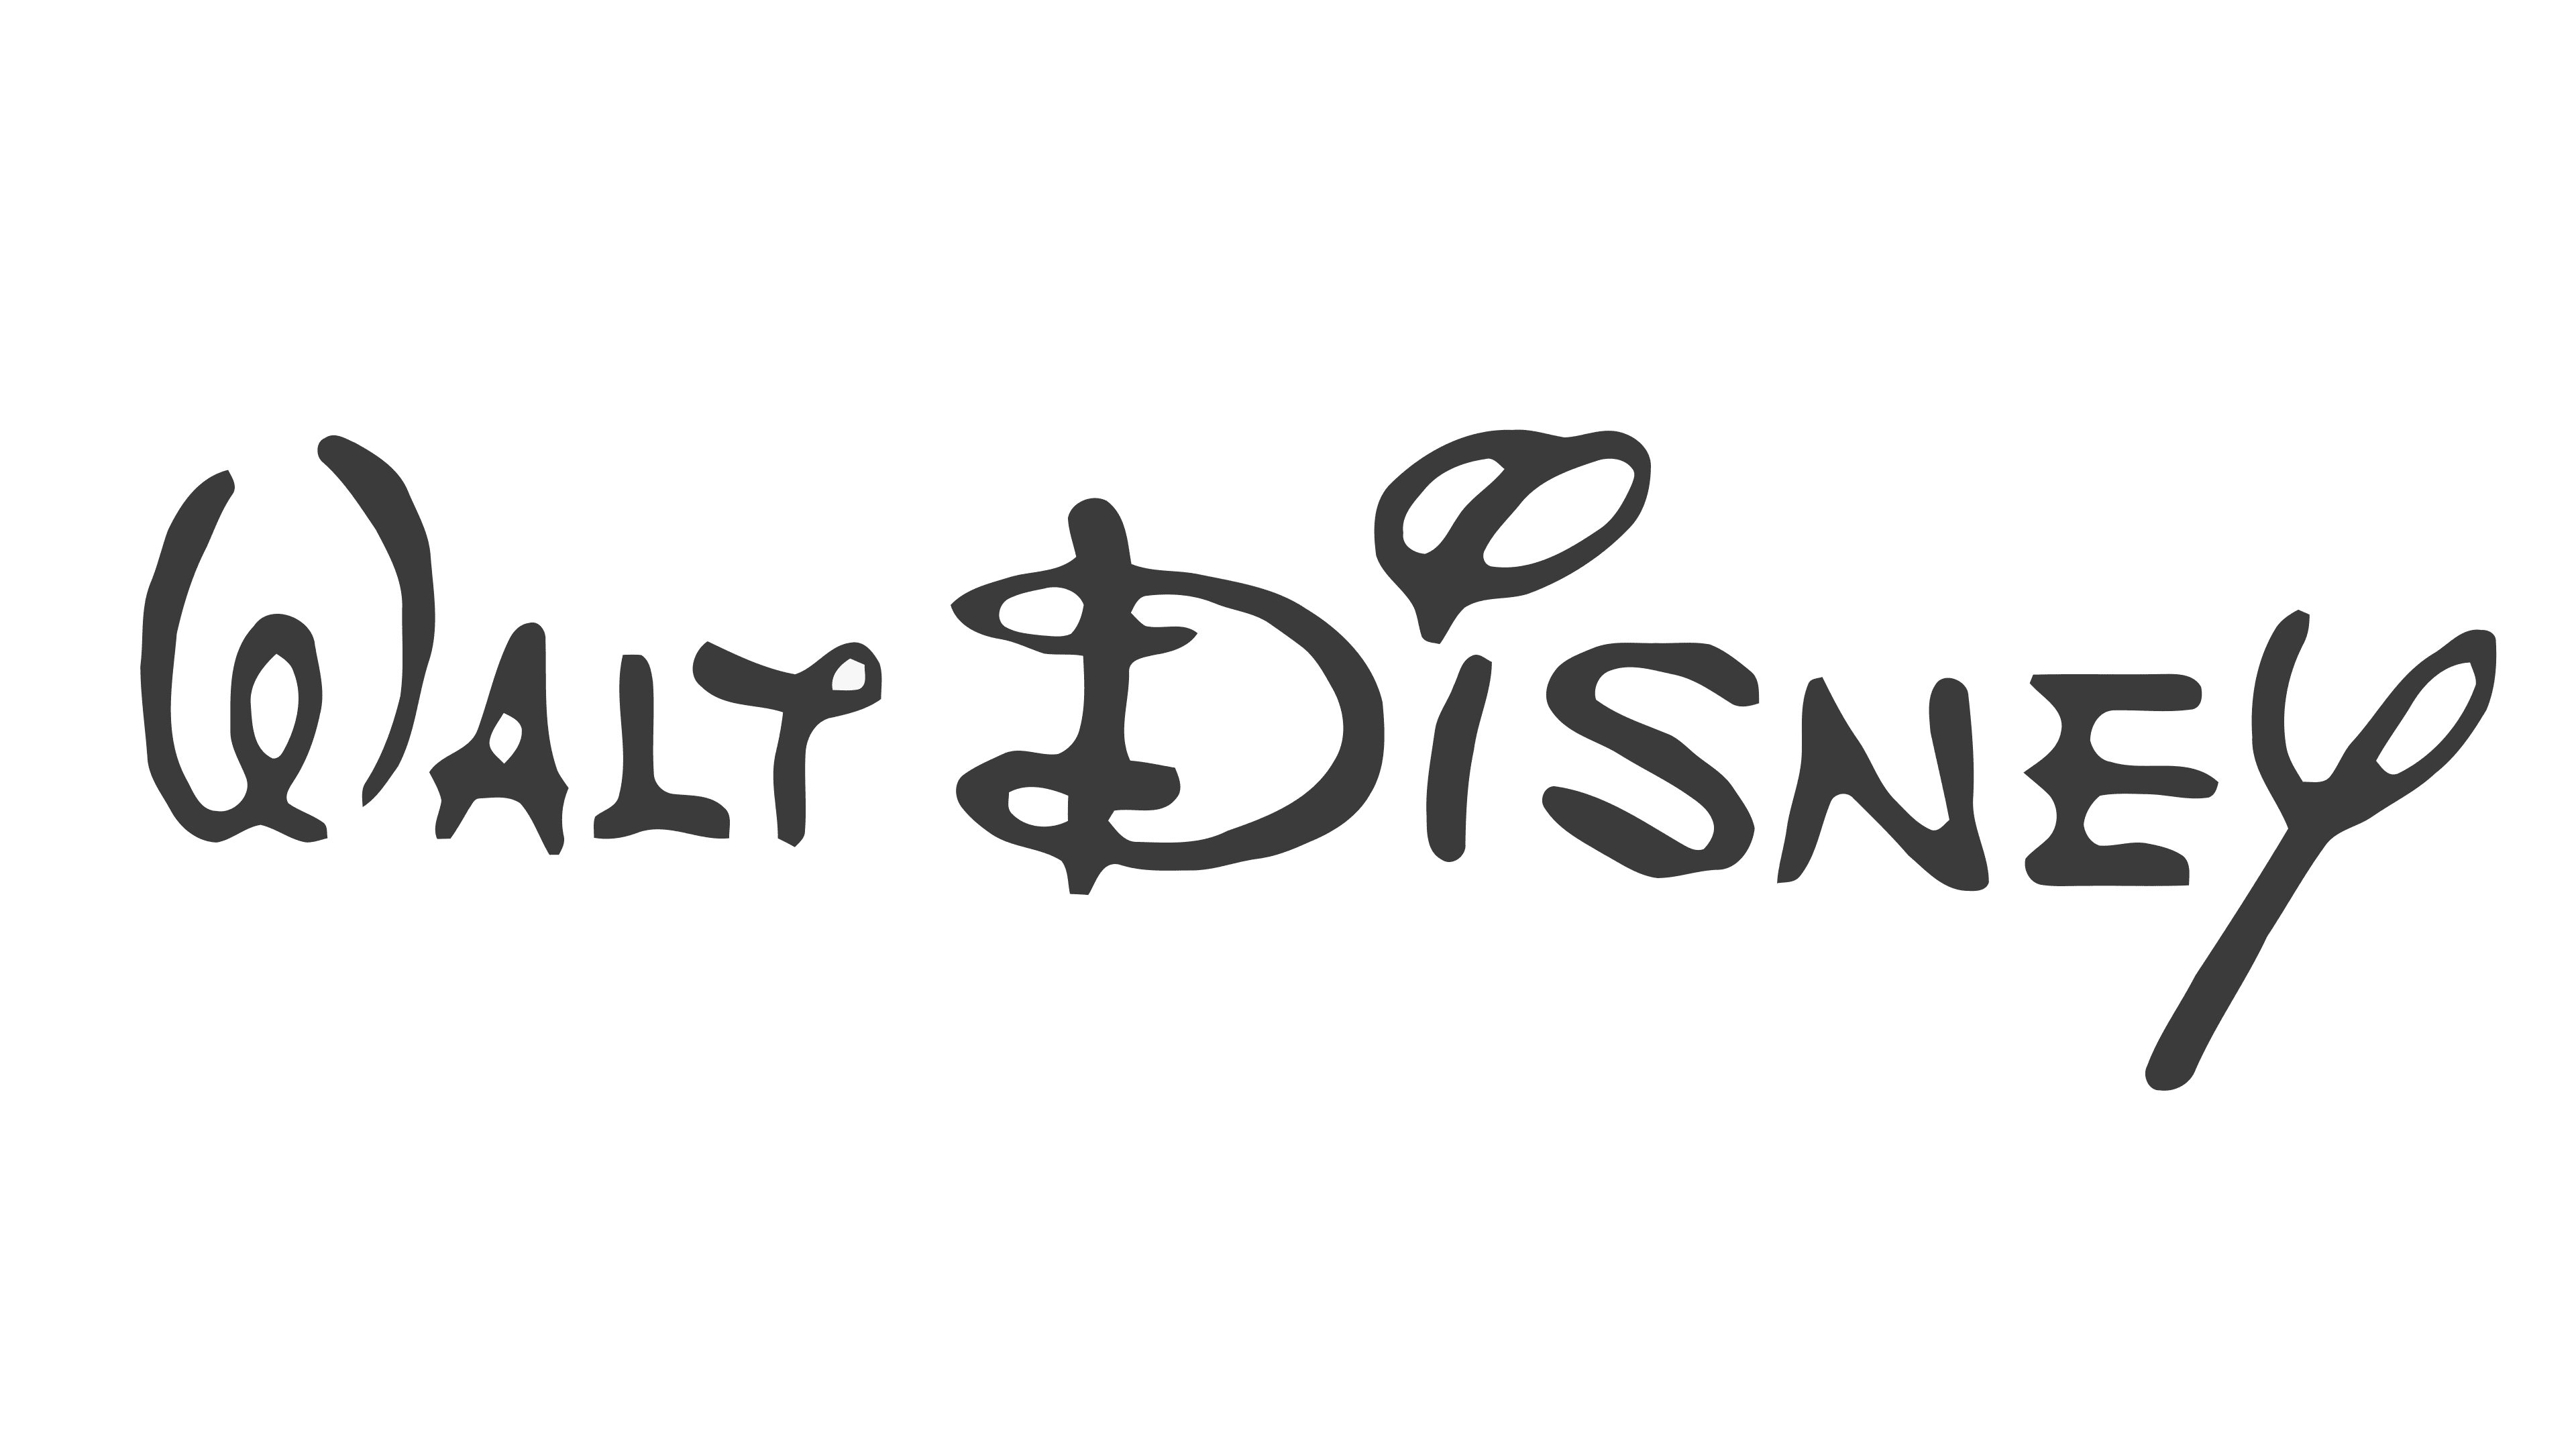 Logo De Disney